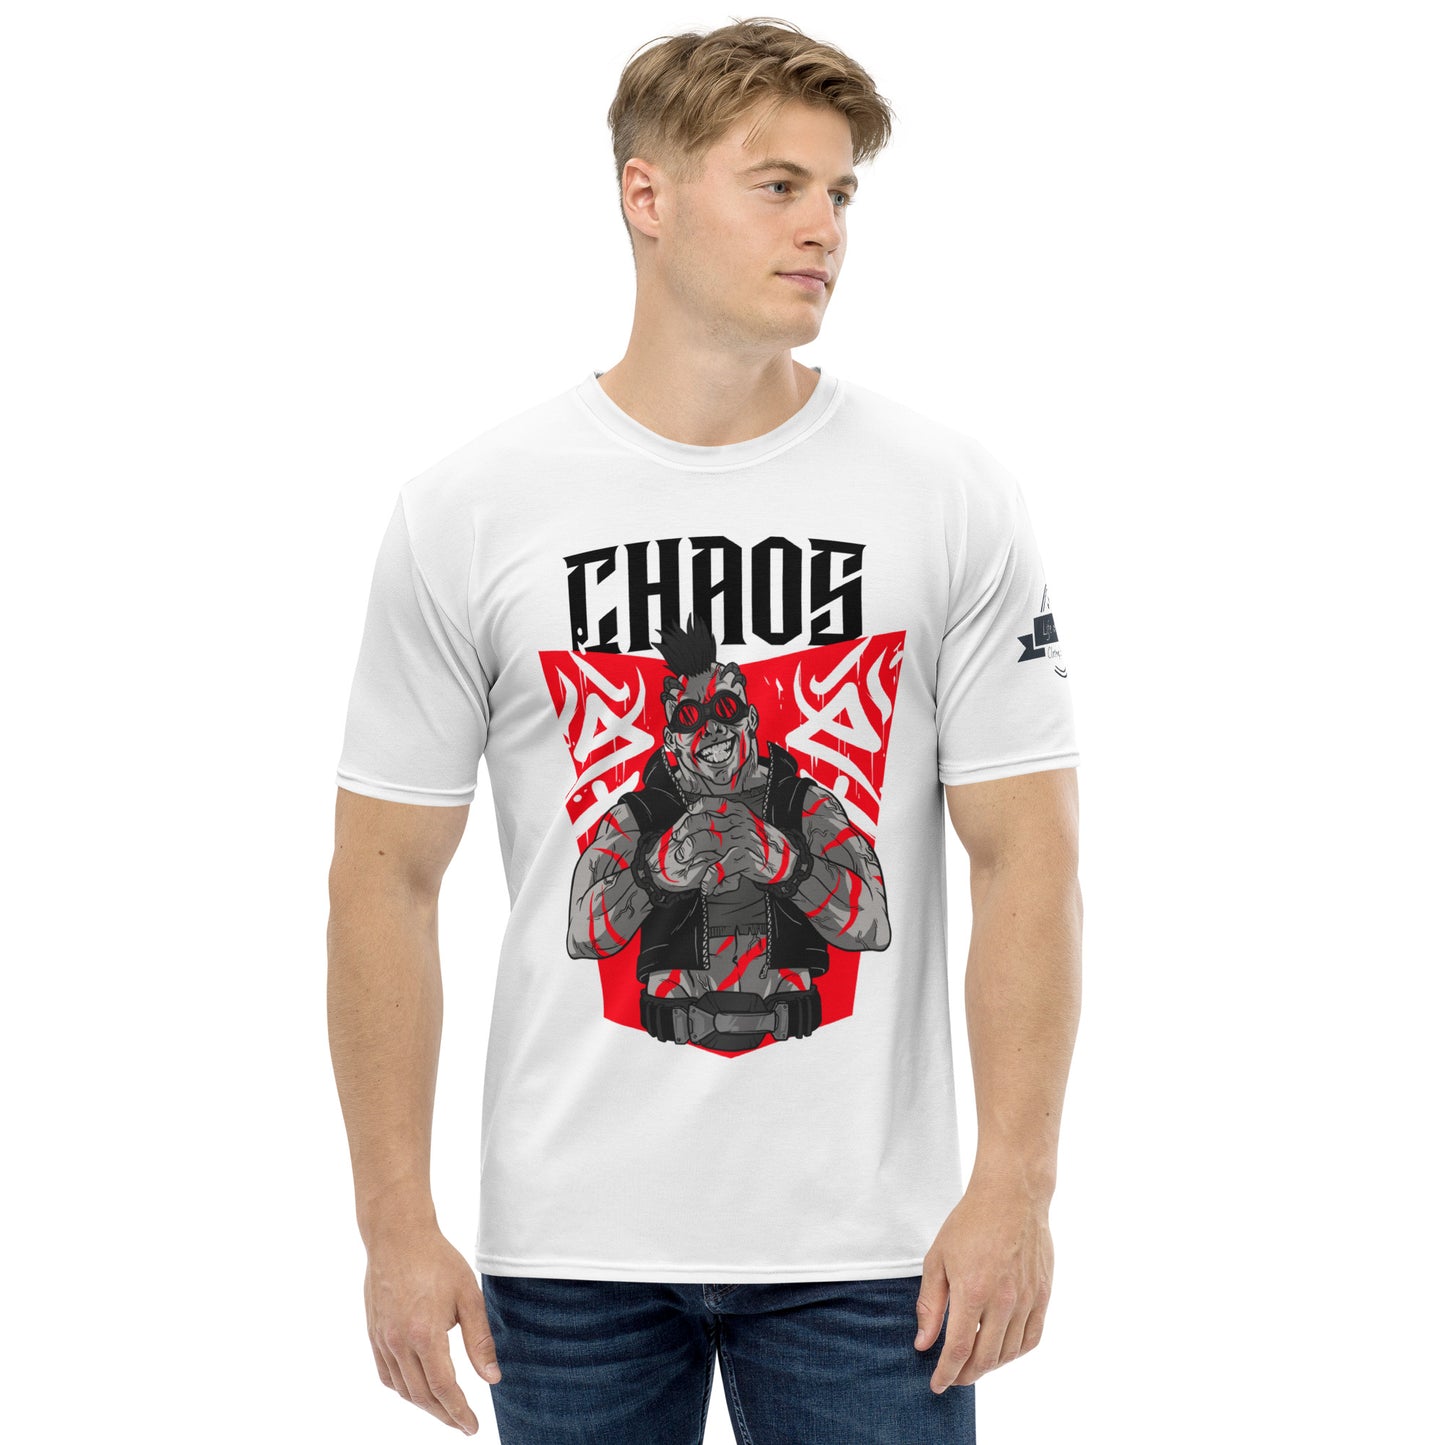 'Chaos Collection' Chaos Men's t-shirt